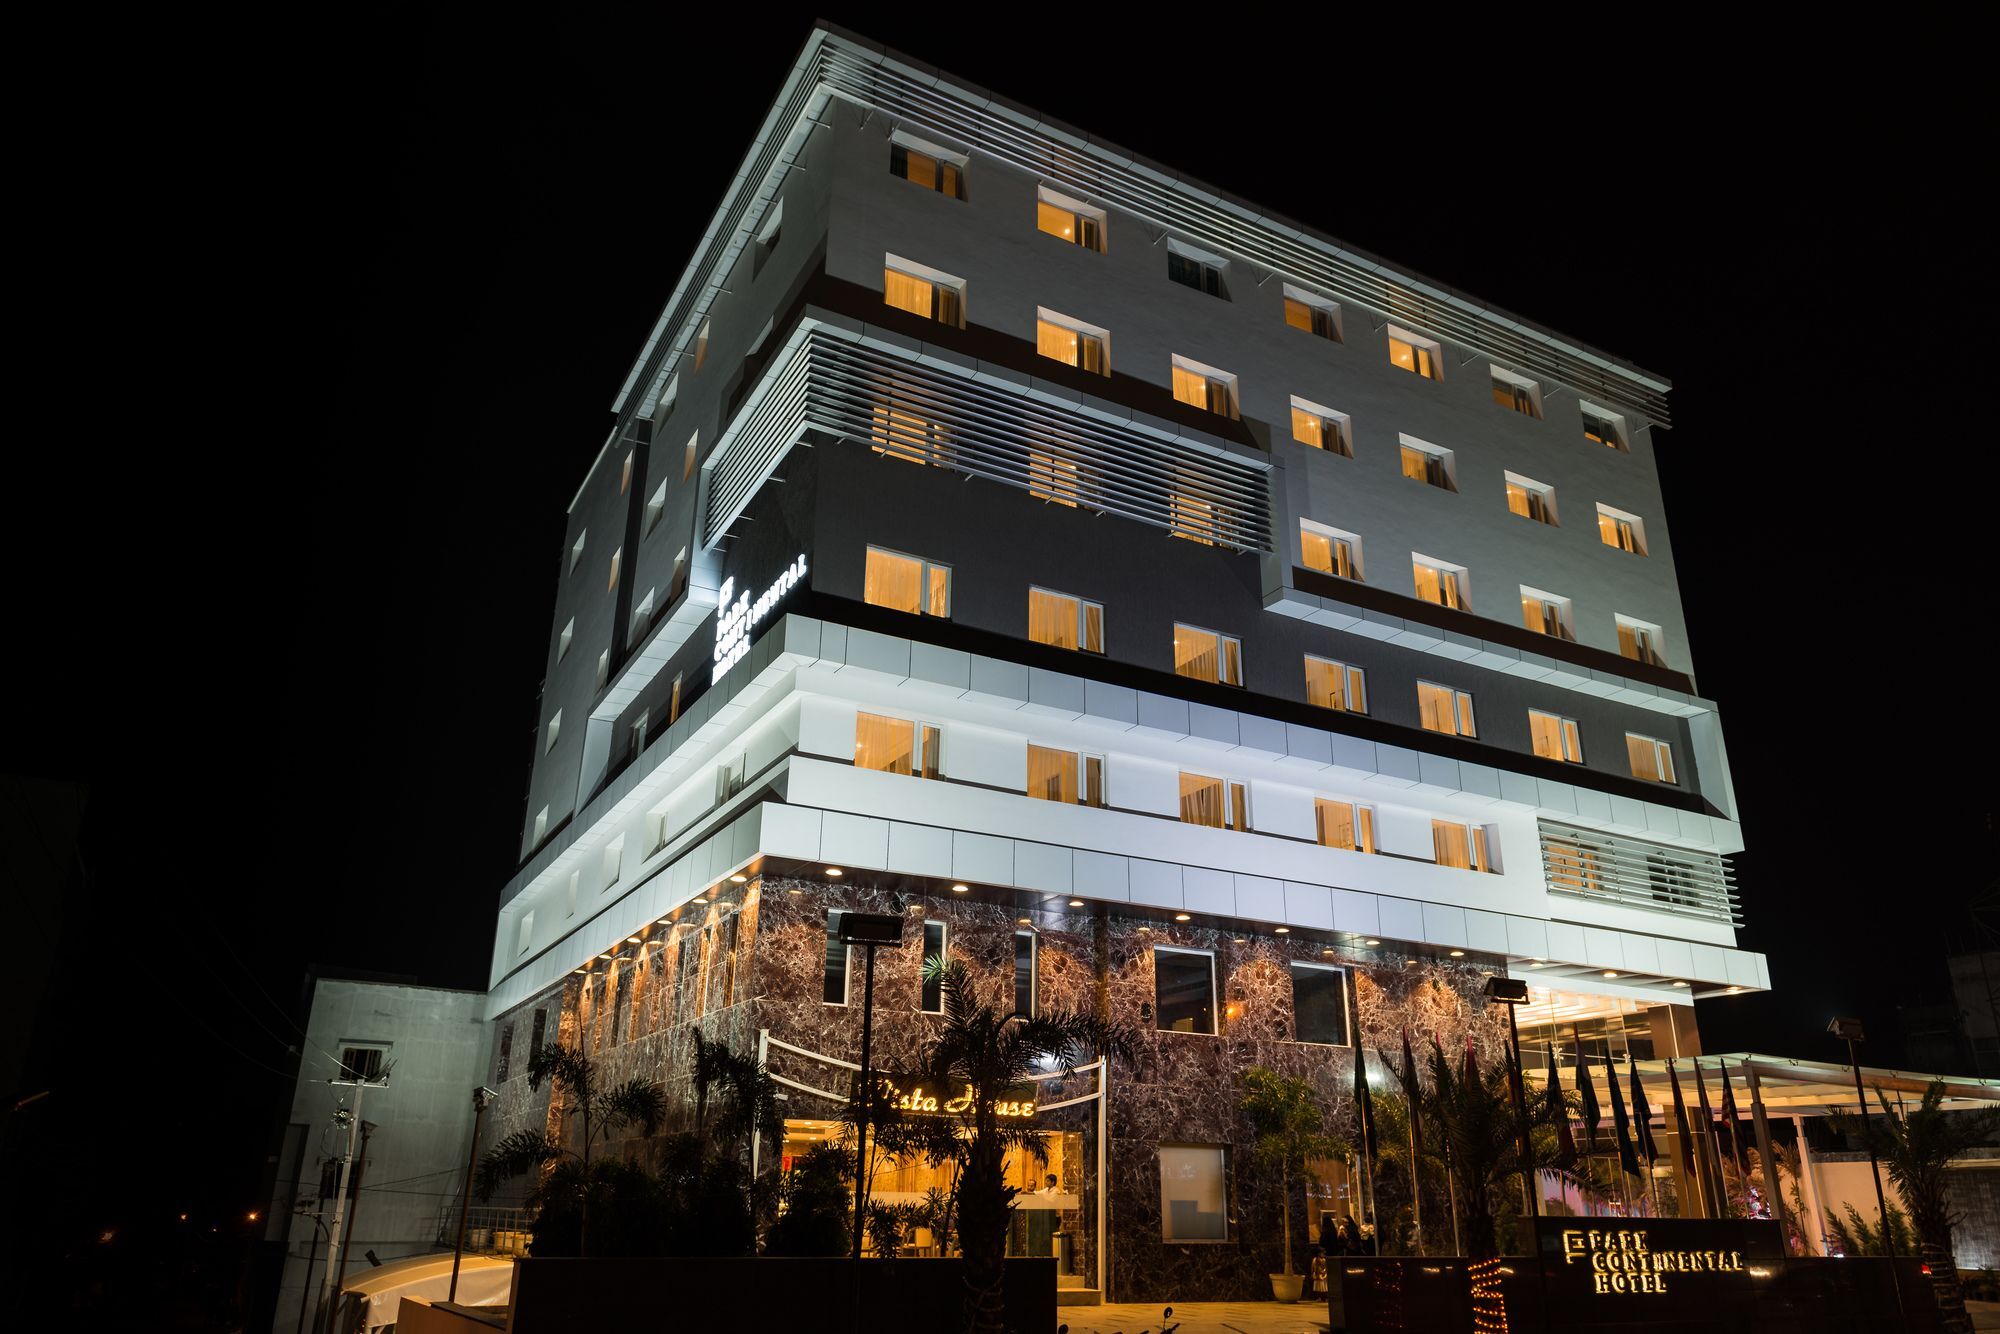 Park Continental Hotel Hyderabad Exterior photo